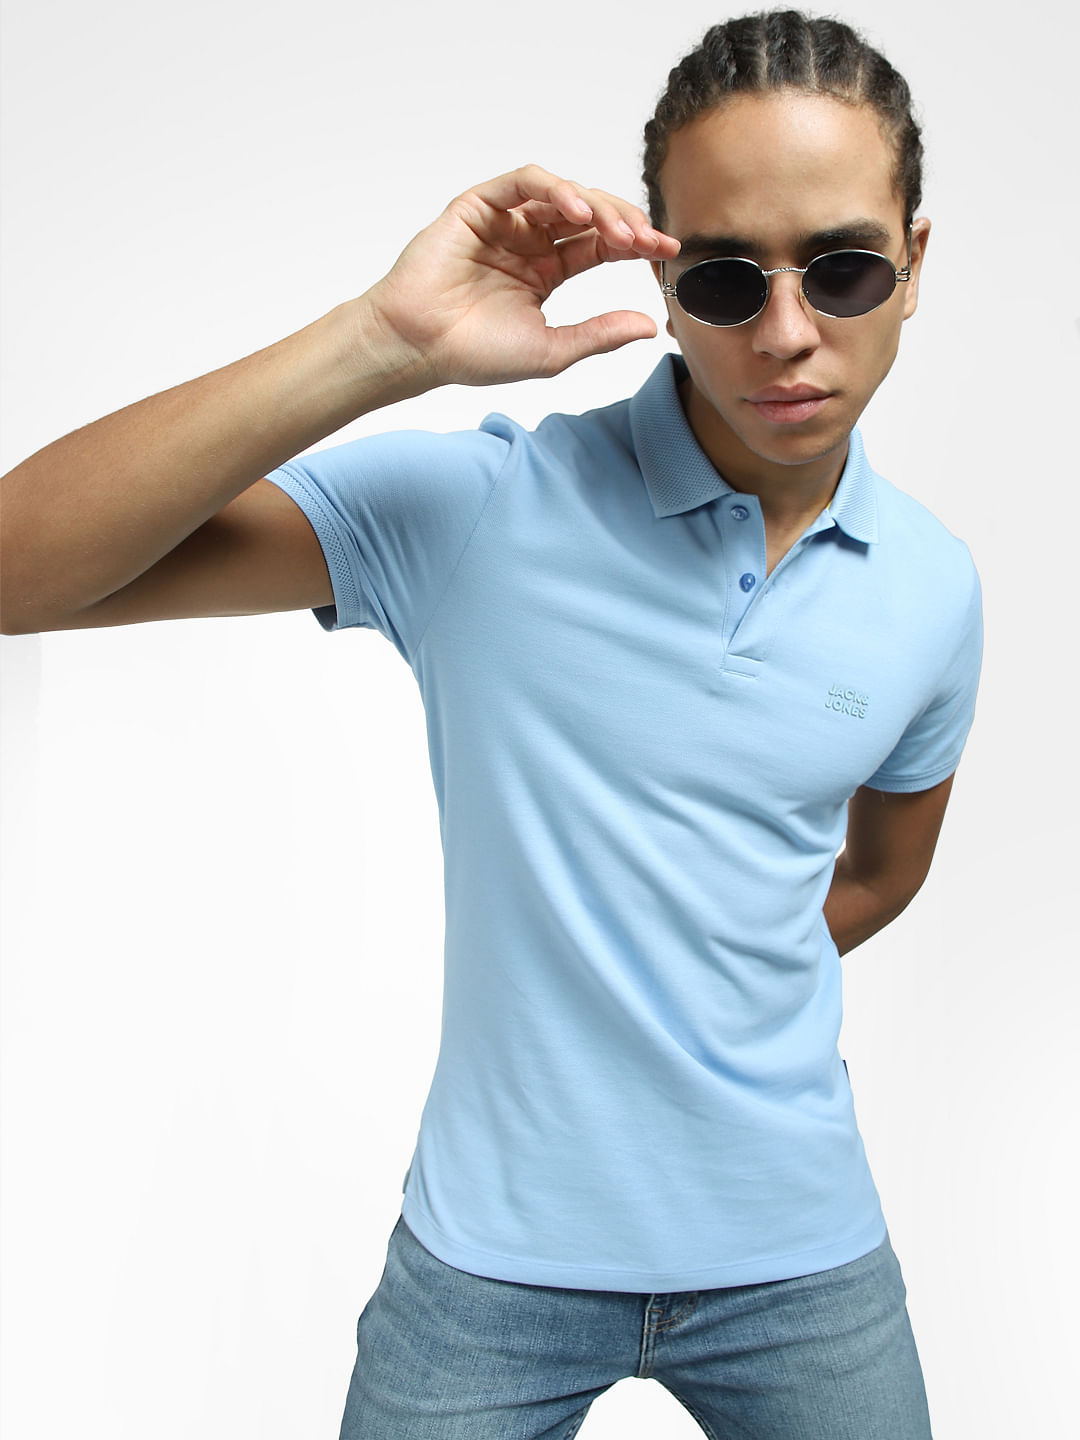 20 Blue Pant Combination Shirt For Men  Boldskycom